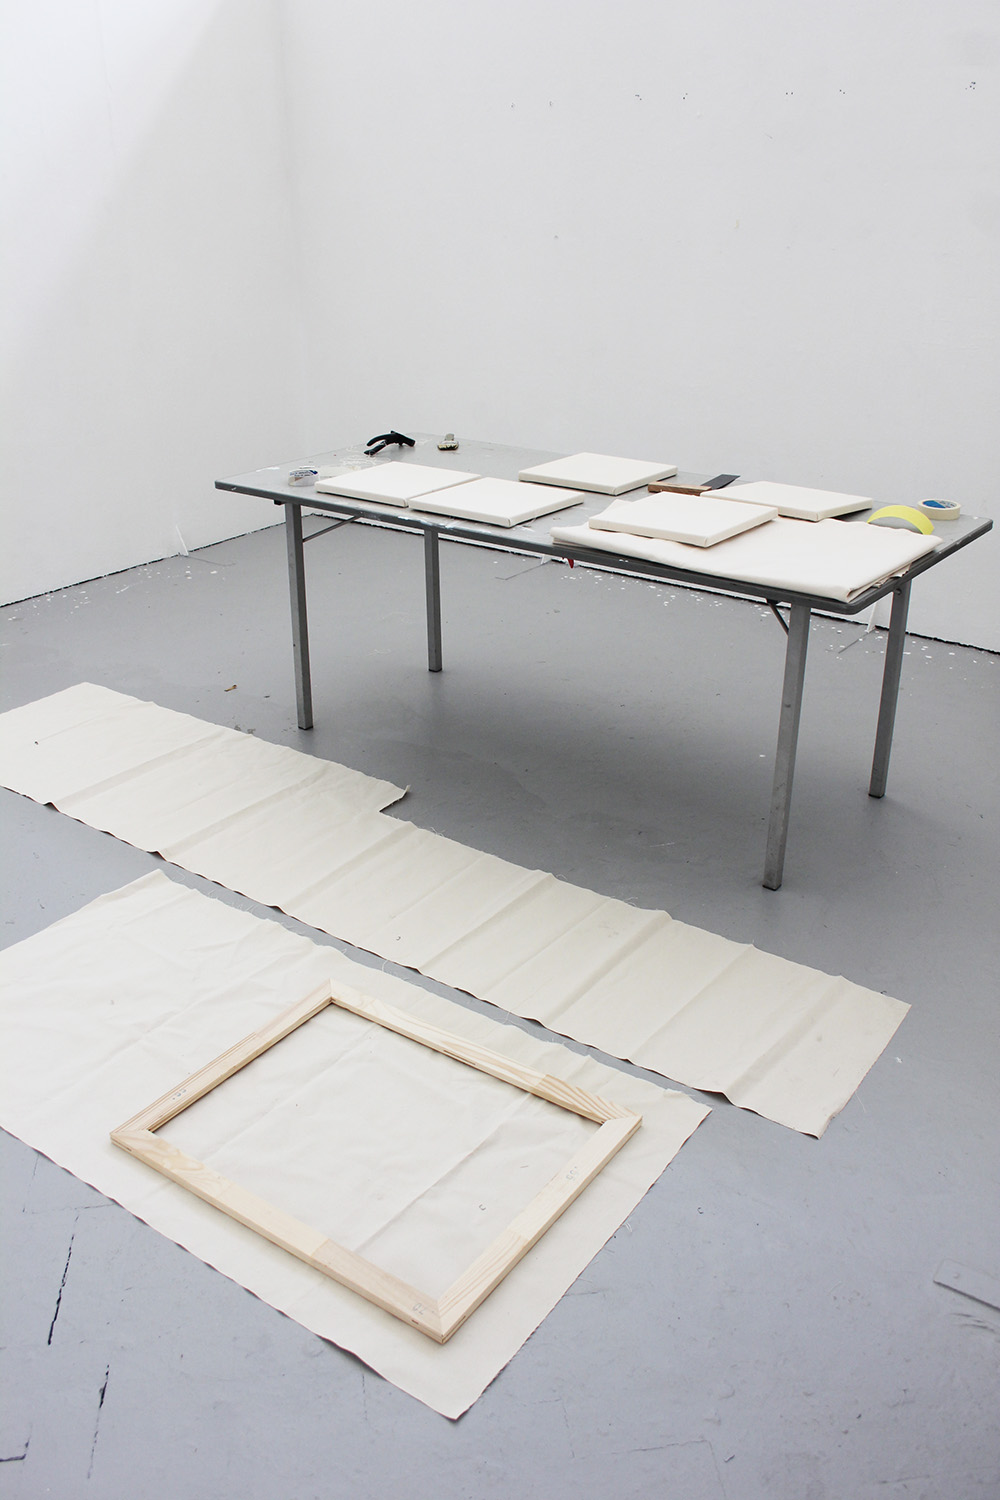 Artistic Process, Bartosz Beda Preparing Canvases in the art studio